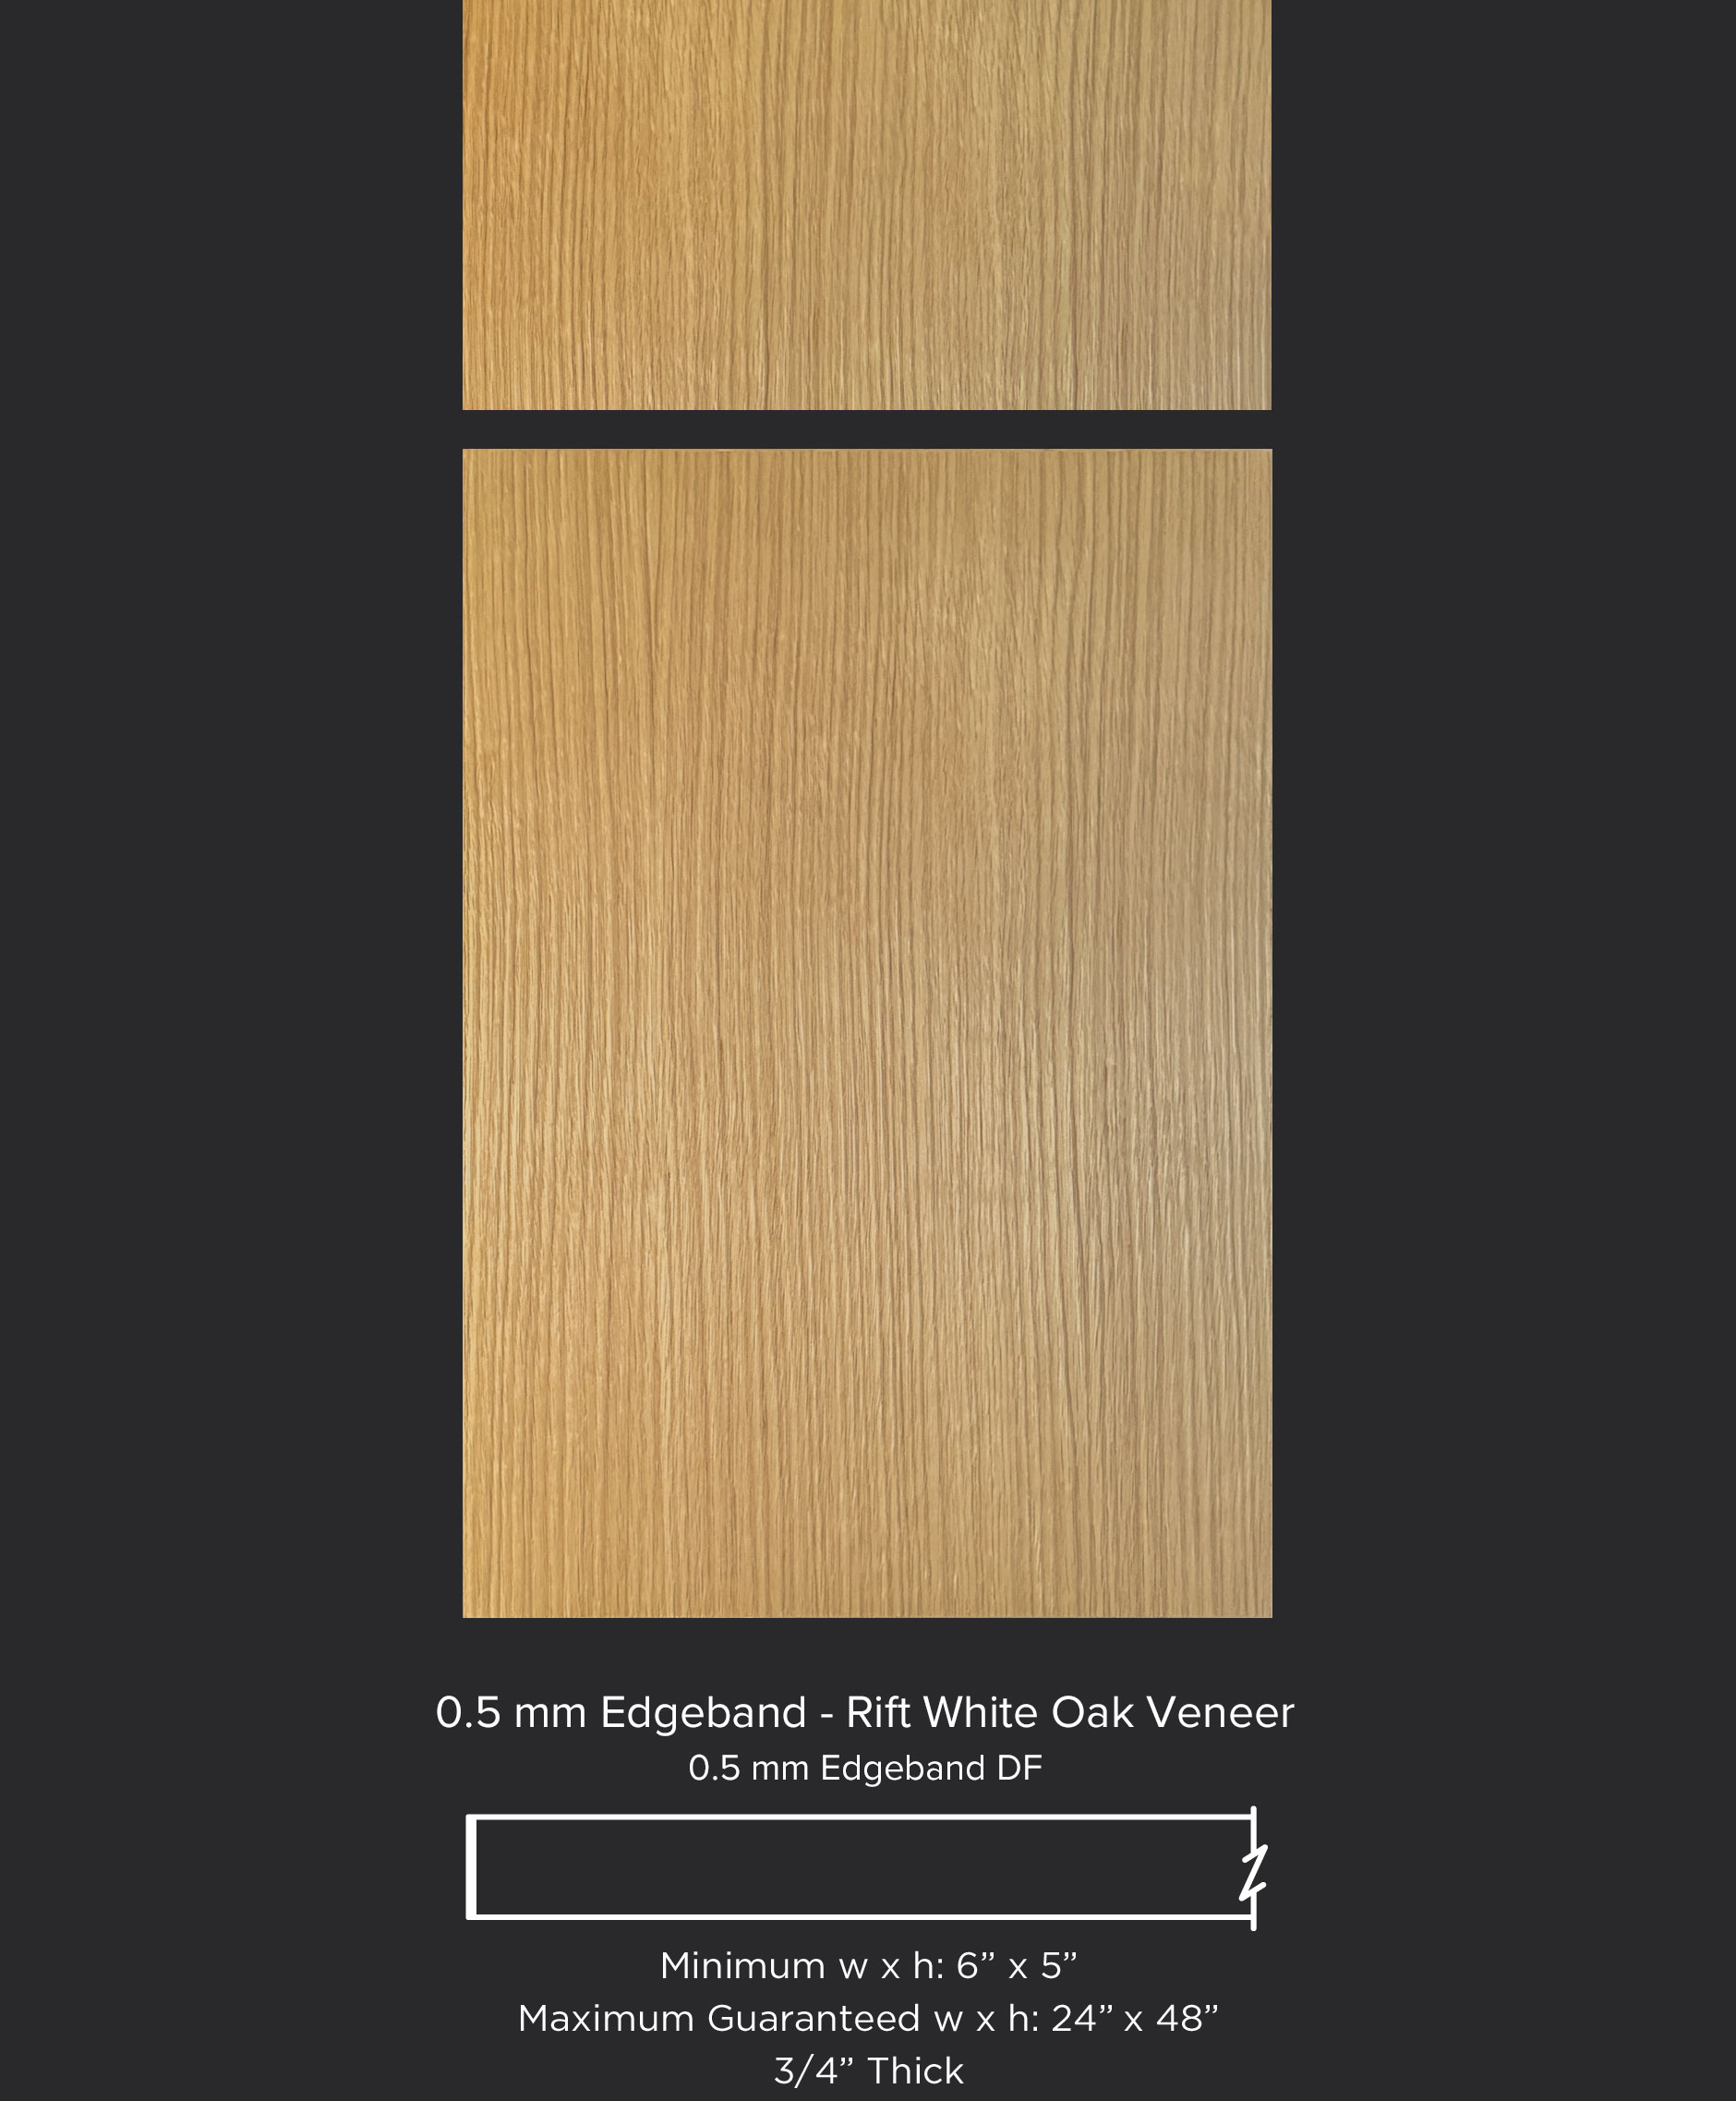 0.5mm Edgebanded Rift White Oak Veneer cabinet door with vertical grain drawer front